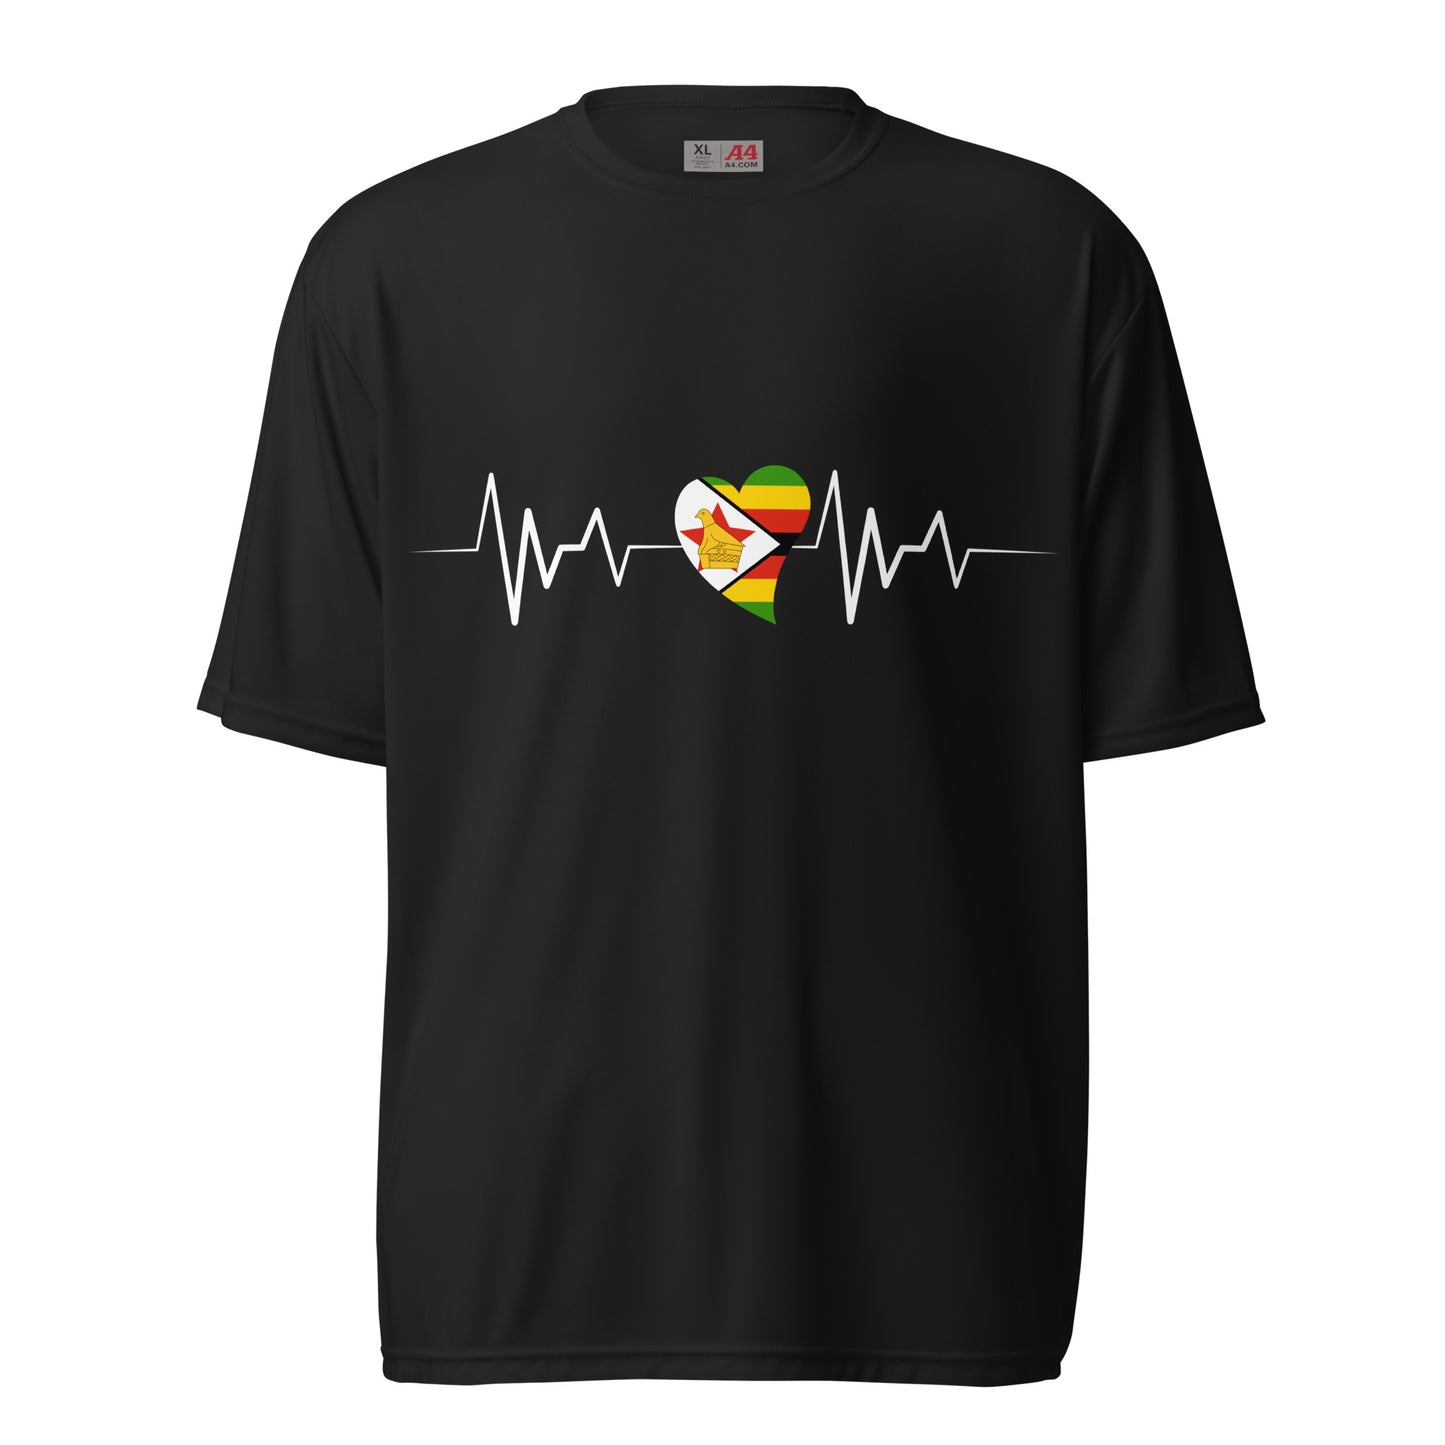 Unisex performance crew neck Zim Heartbeat t-shirt